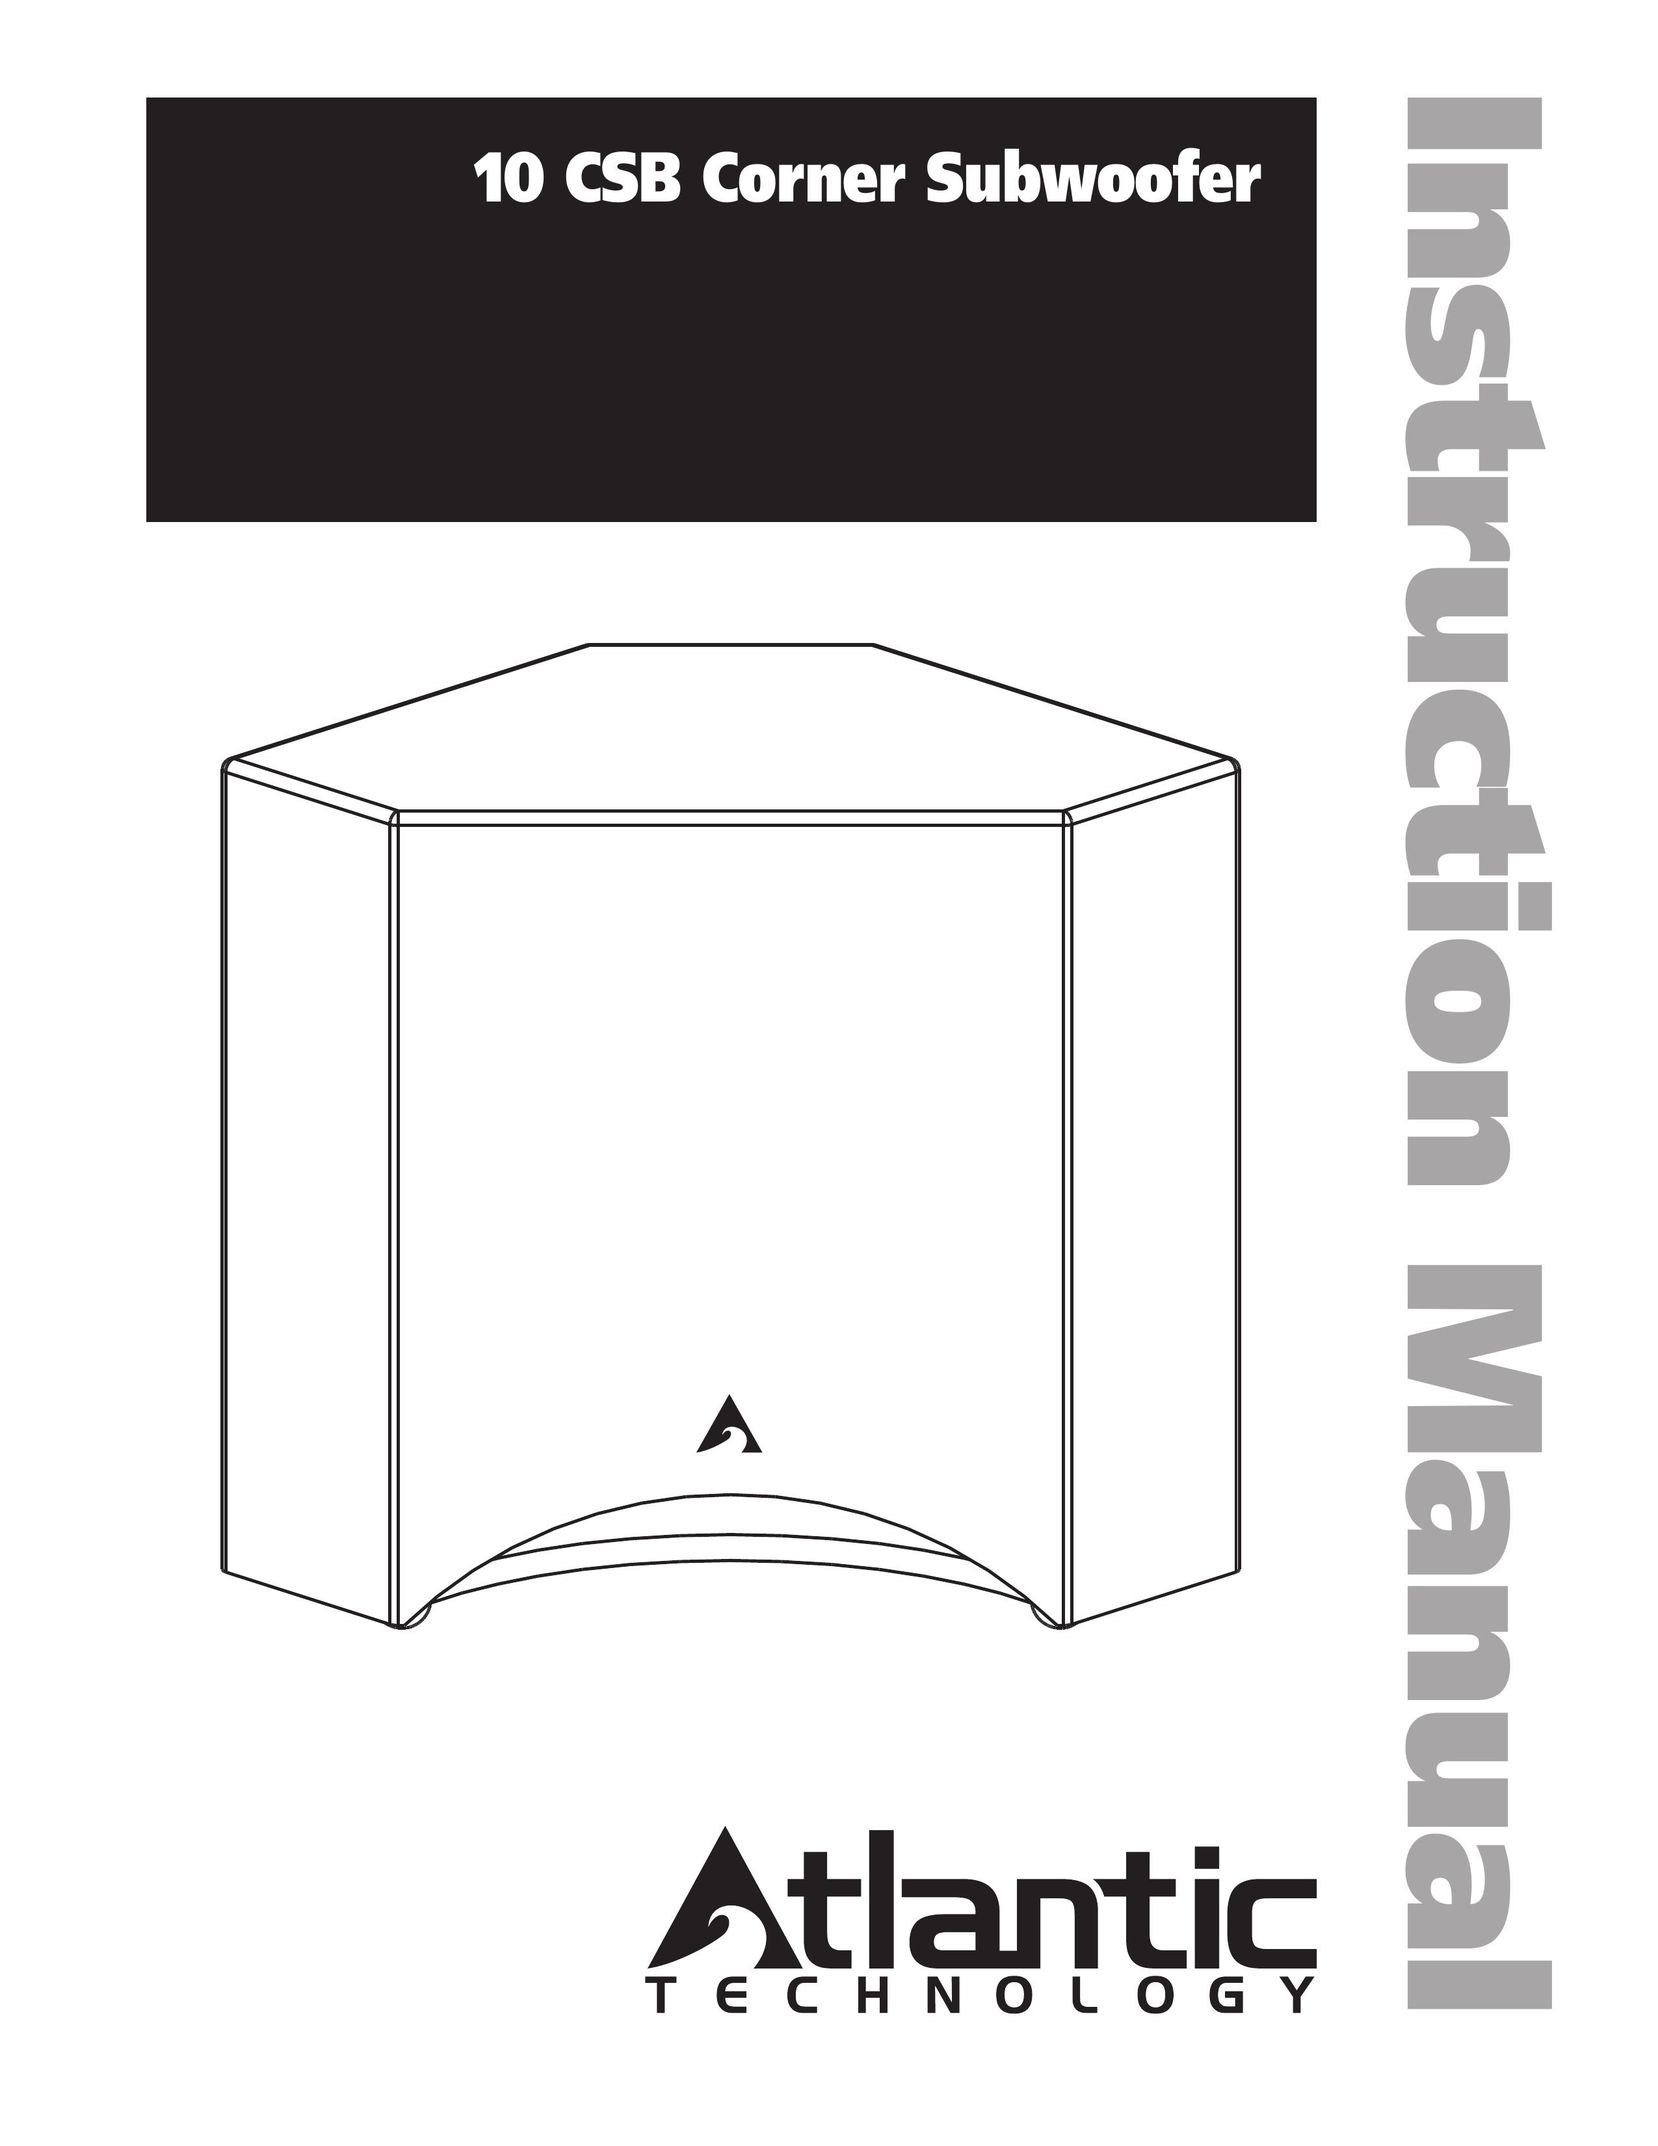 Atlantic Technology 10 CSB Car Speaker User Manual